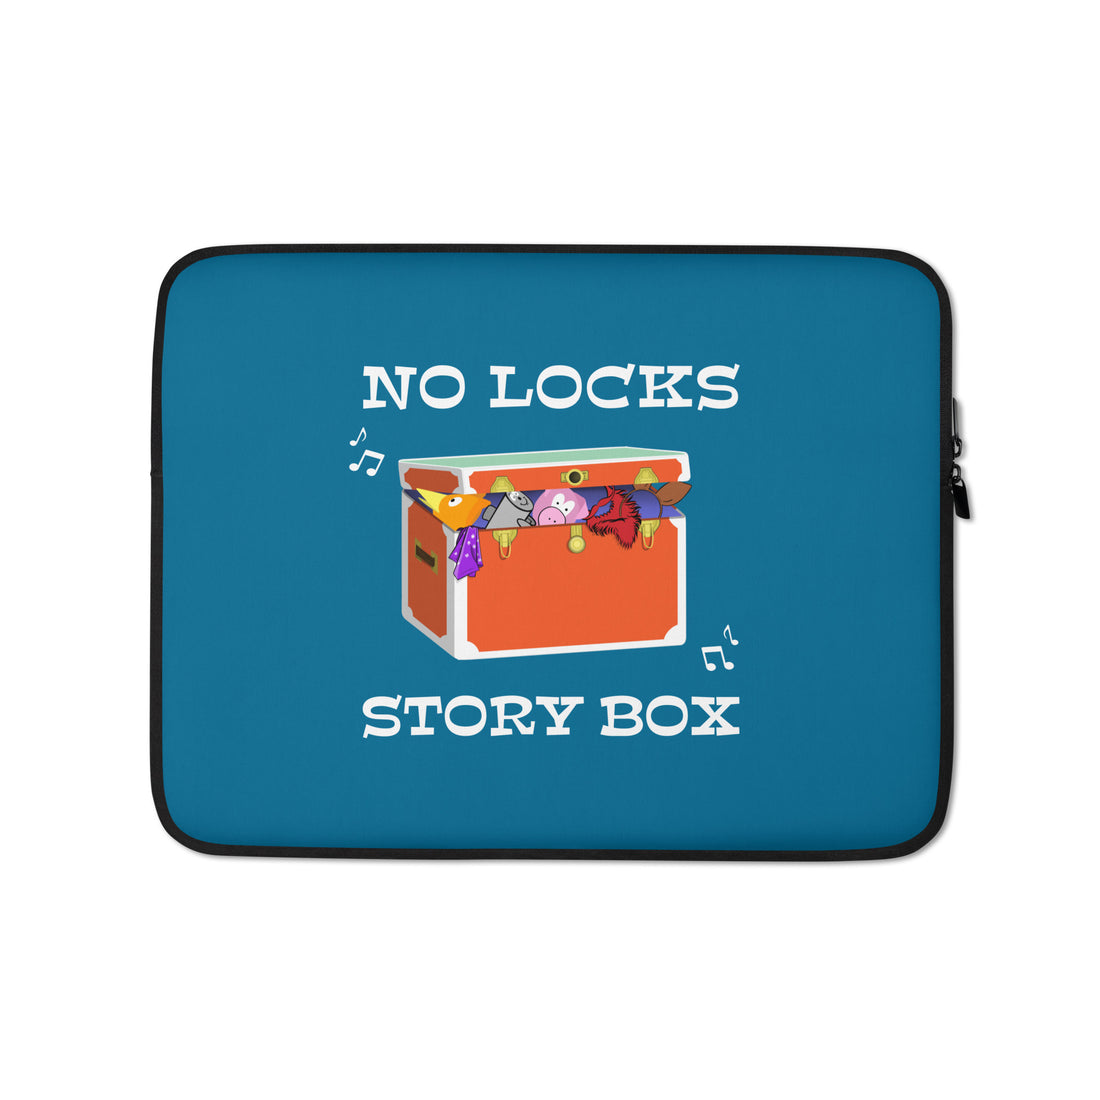 No Locks Story Box Laptop Sleeve